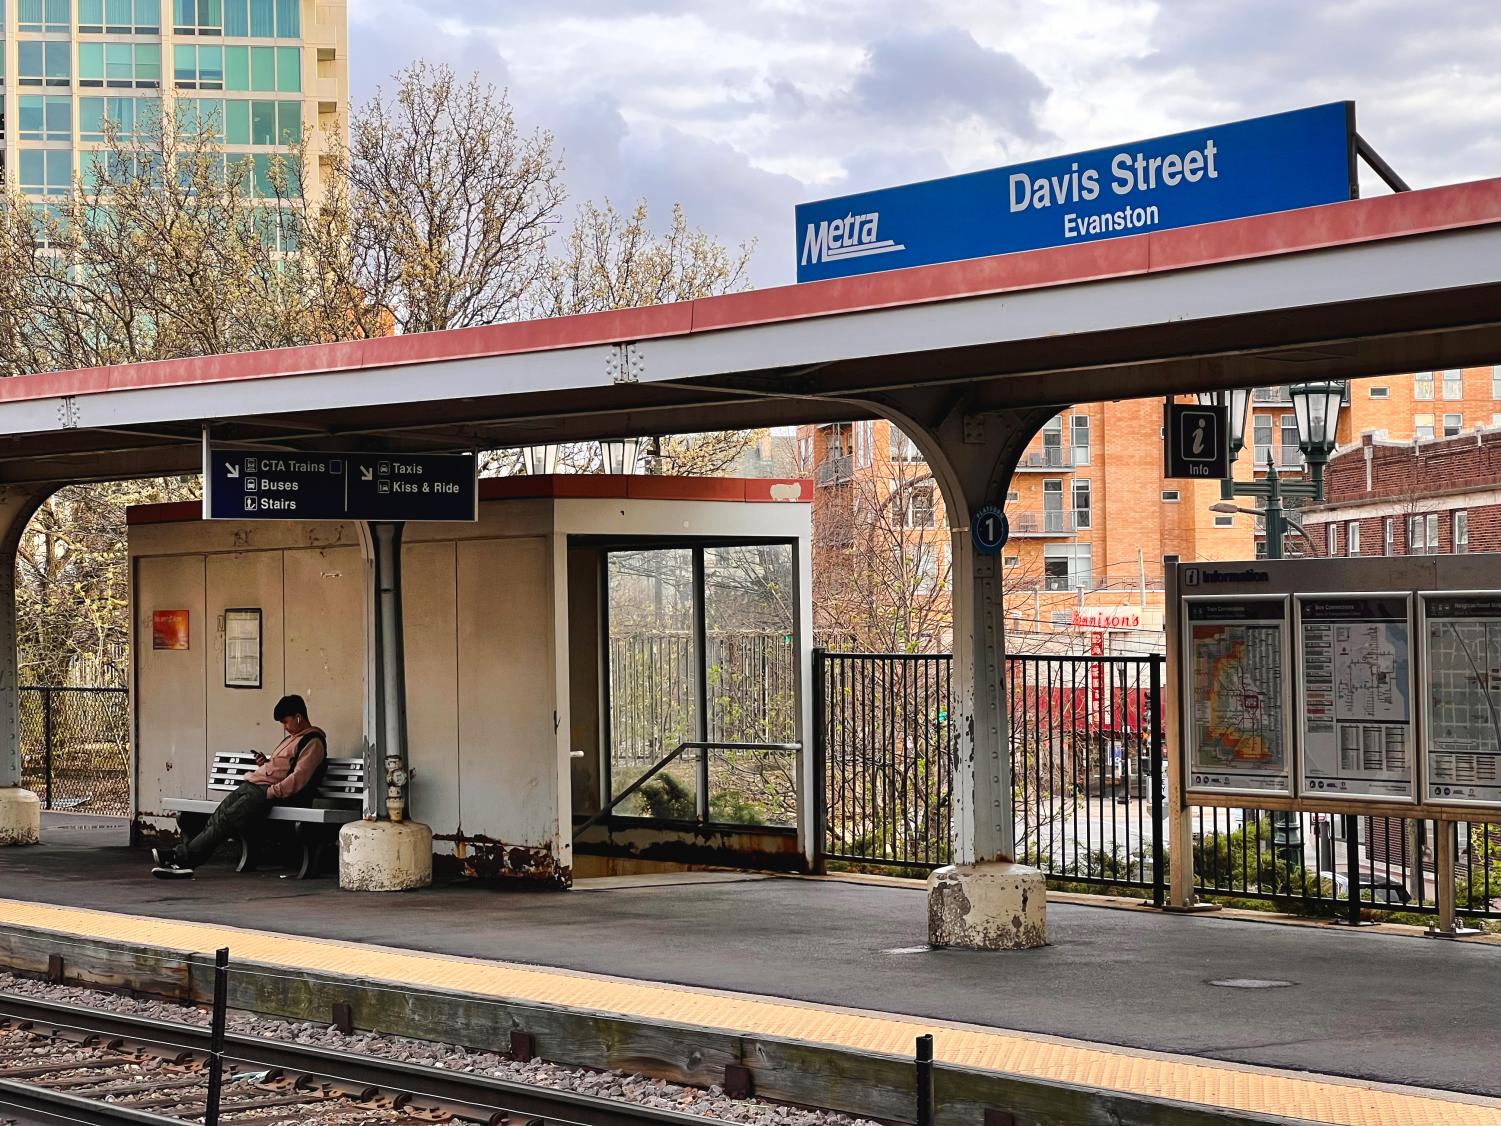 Evanston+Davis+Street+Metra+station+platform+with+one+person+sitting+on+a+bench.